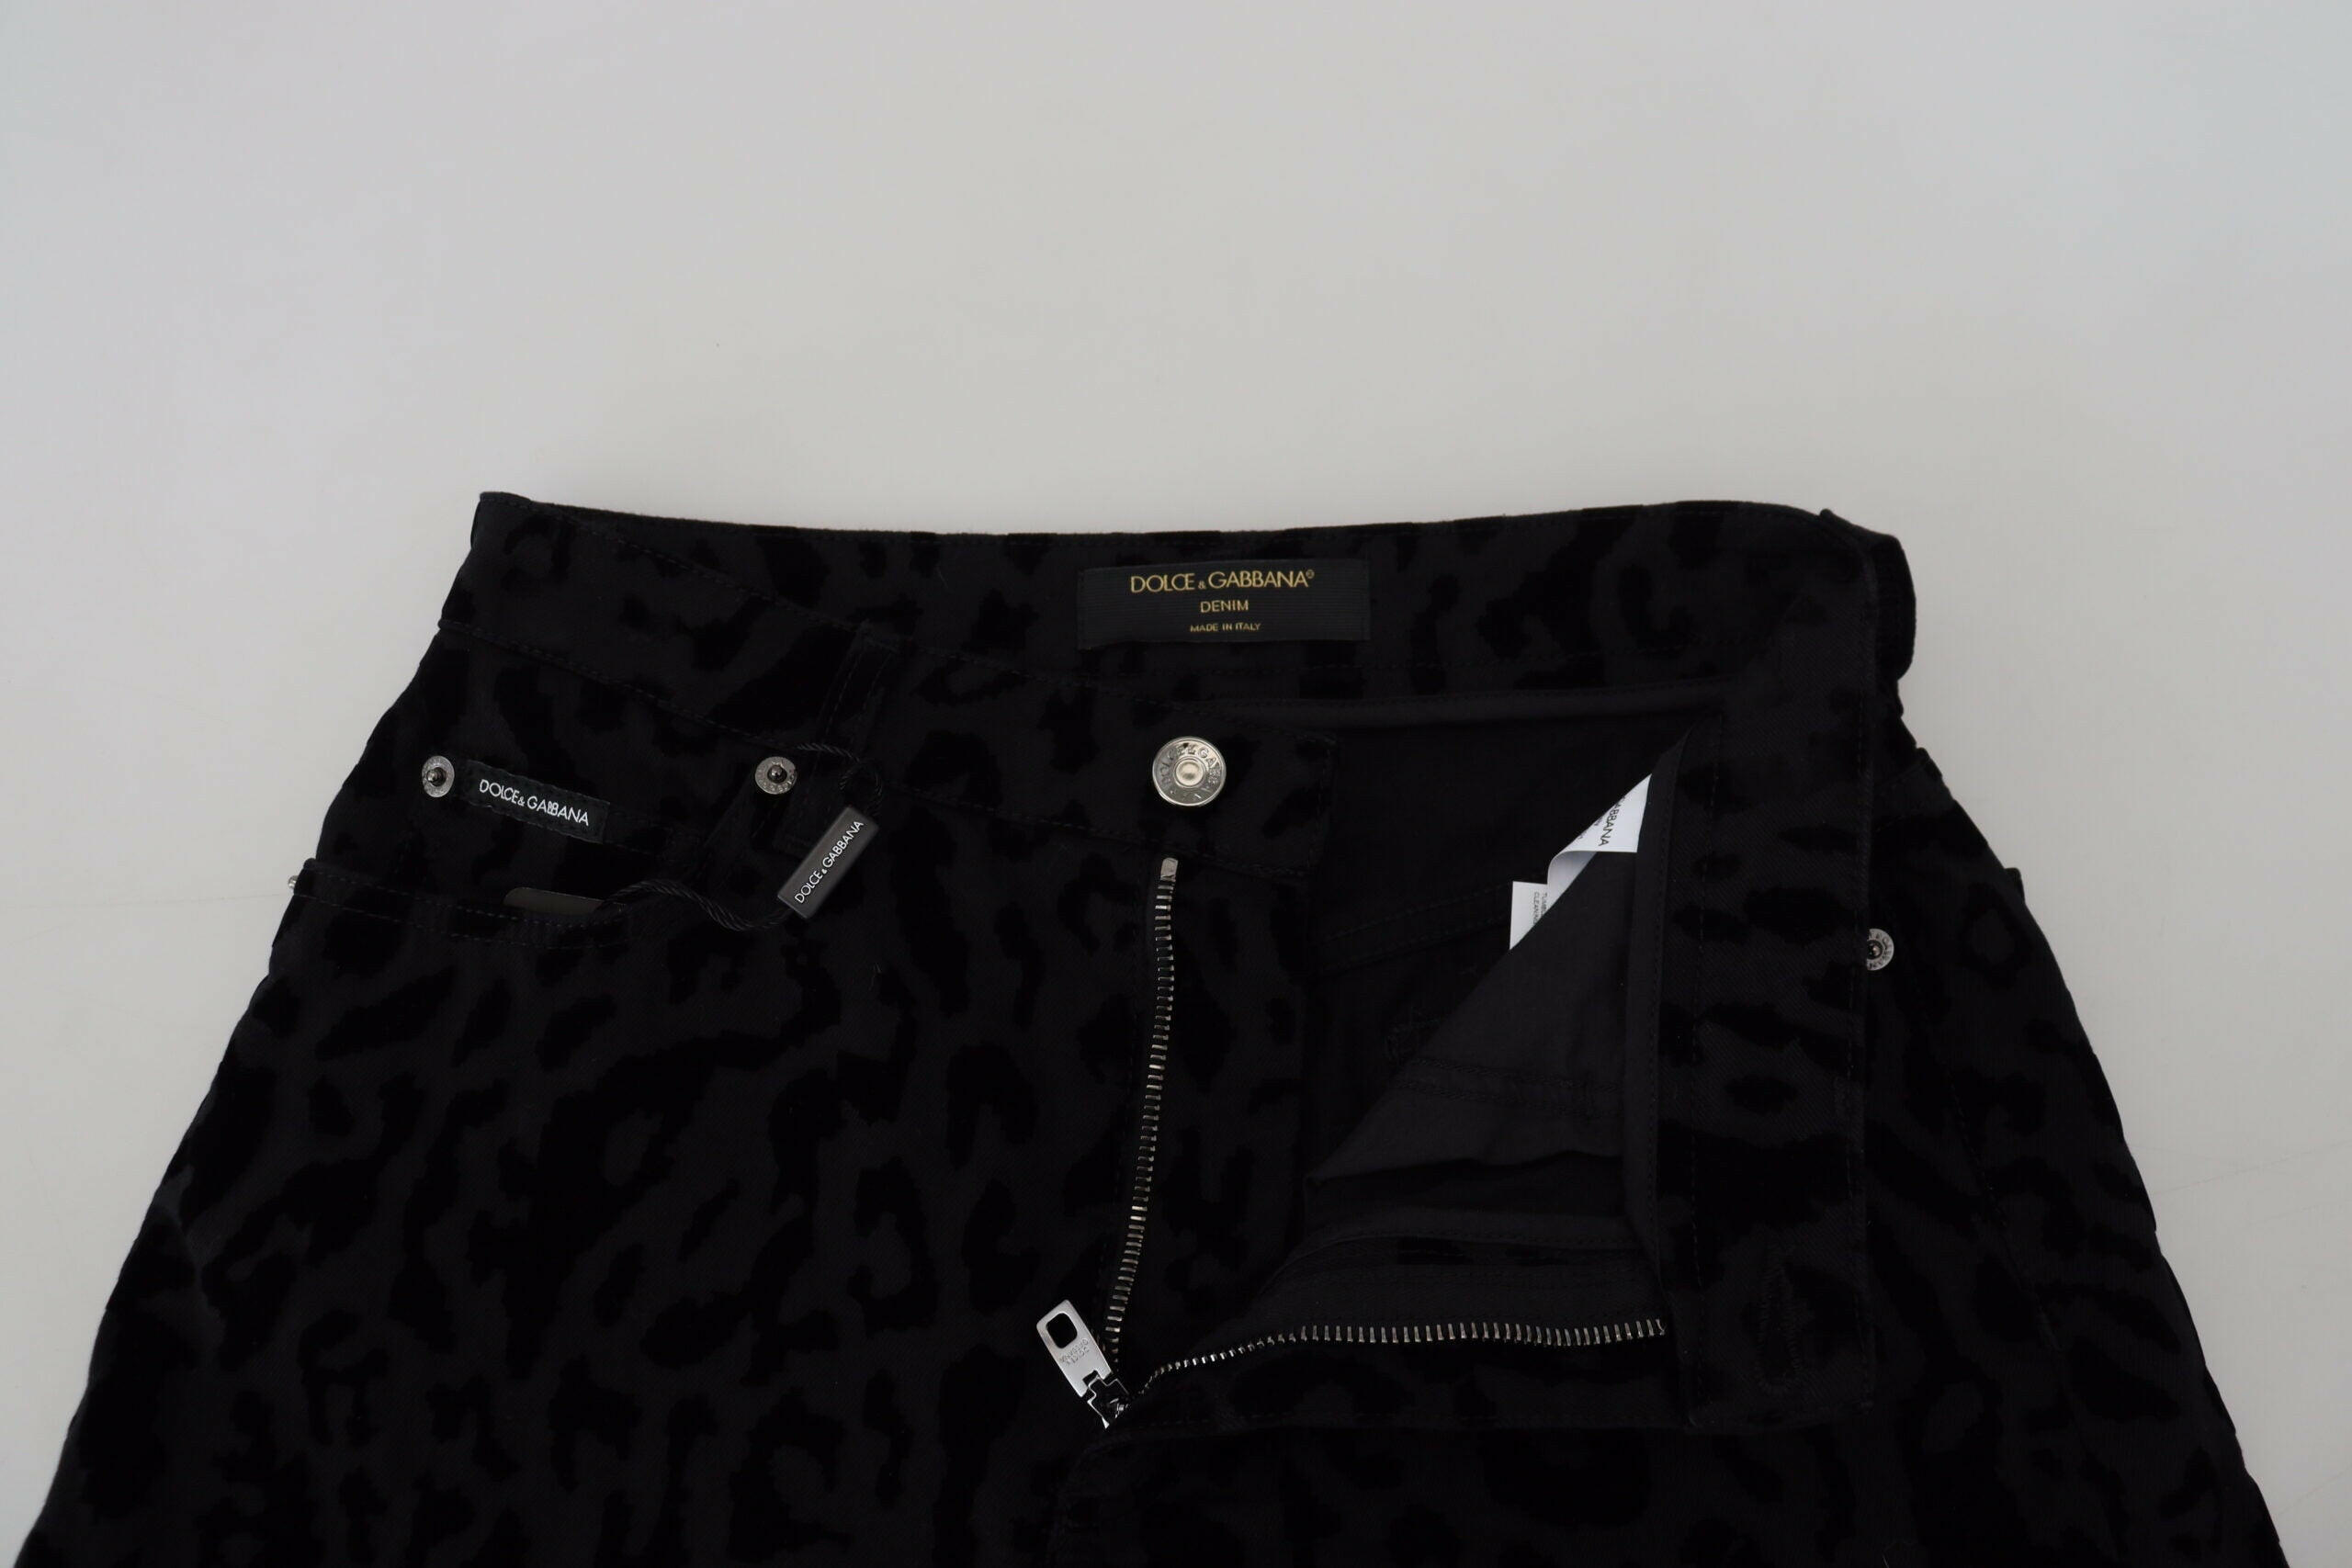 Dolce & Gabbana Black Denim Cotton Stretch Hot Pants Shorts - GENUINE AUTHENTIC BRAND LLC  